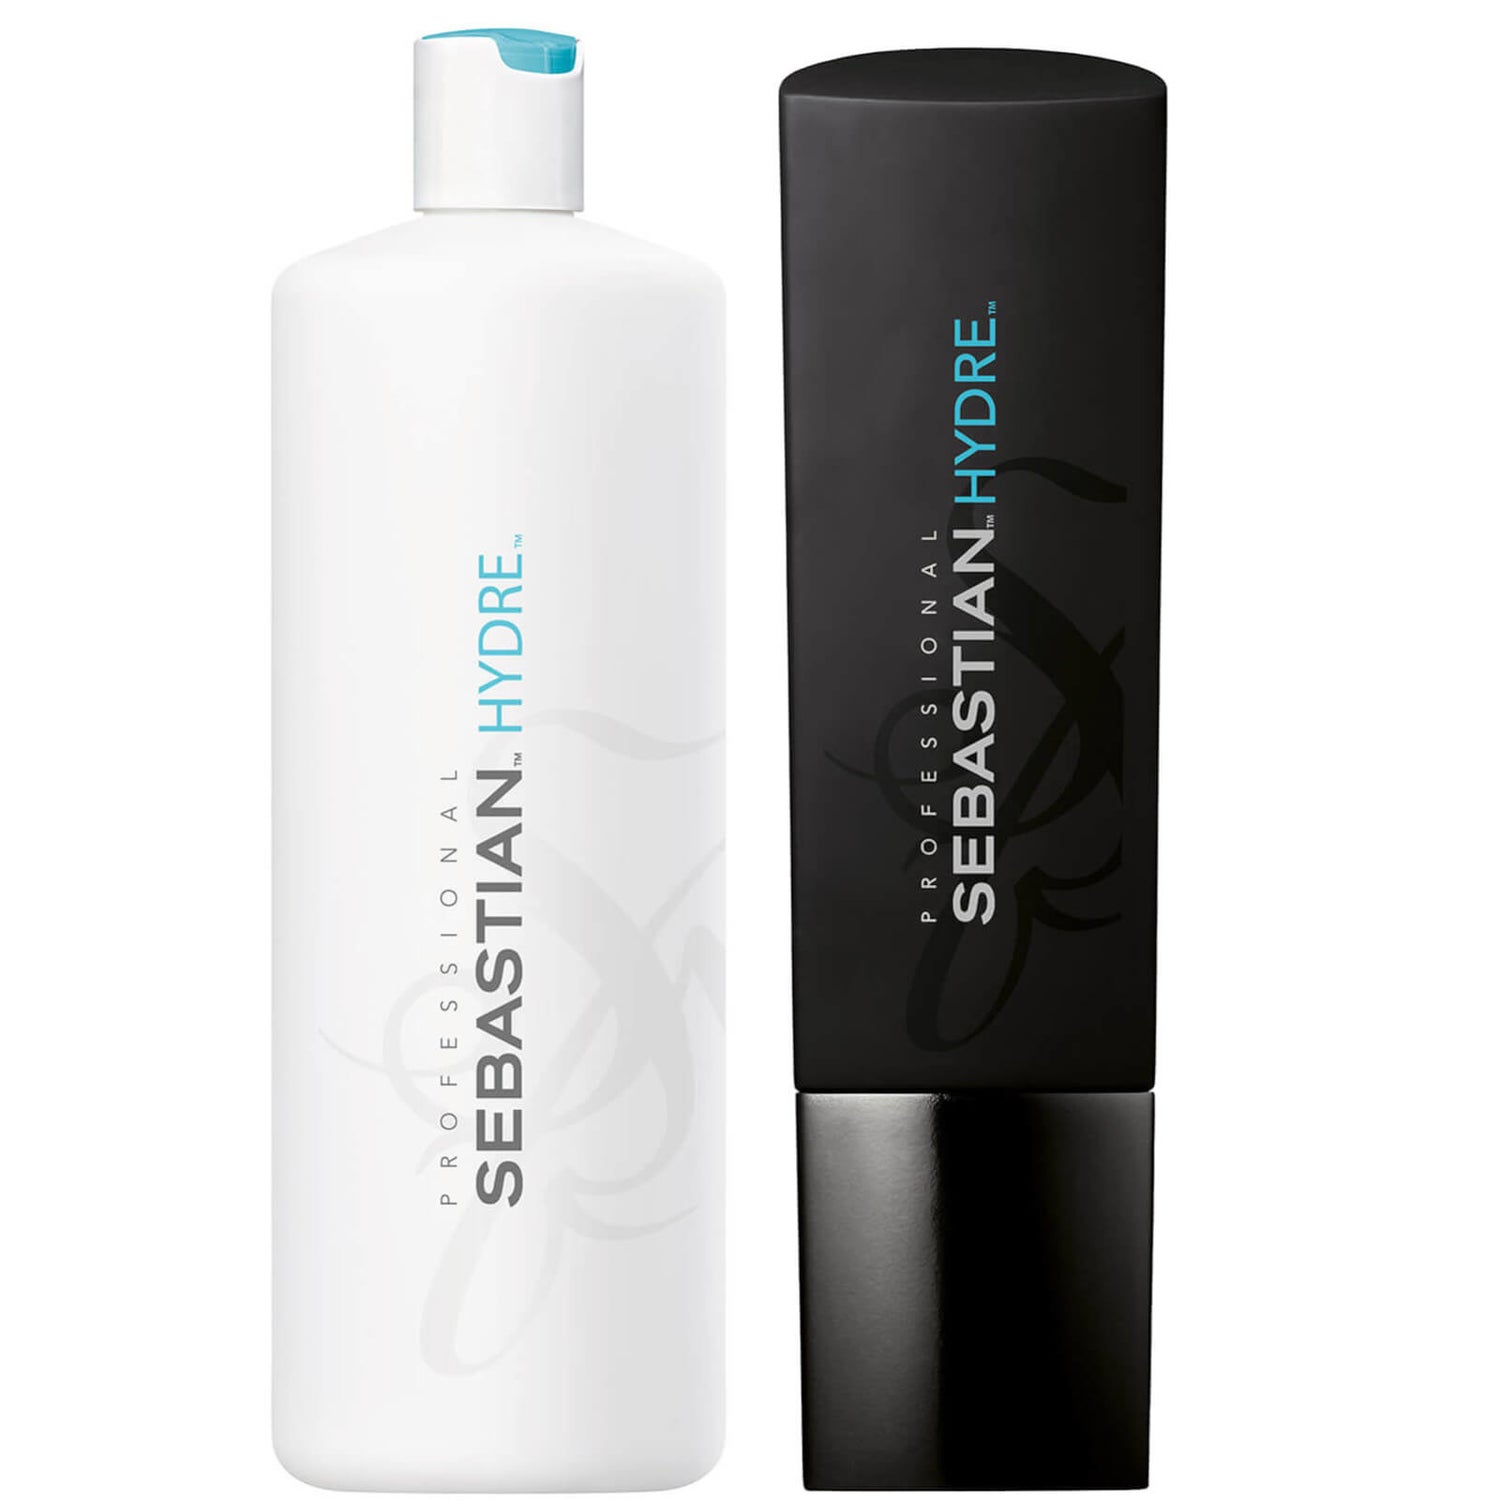 Sebastian Professional Hydre Shampoo and Conditioner Super Size Regime Bundle